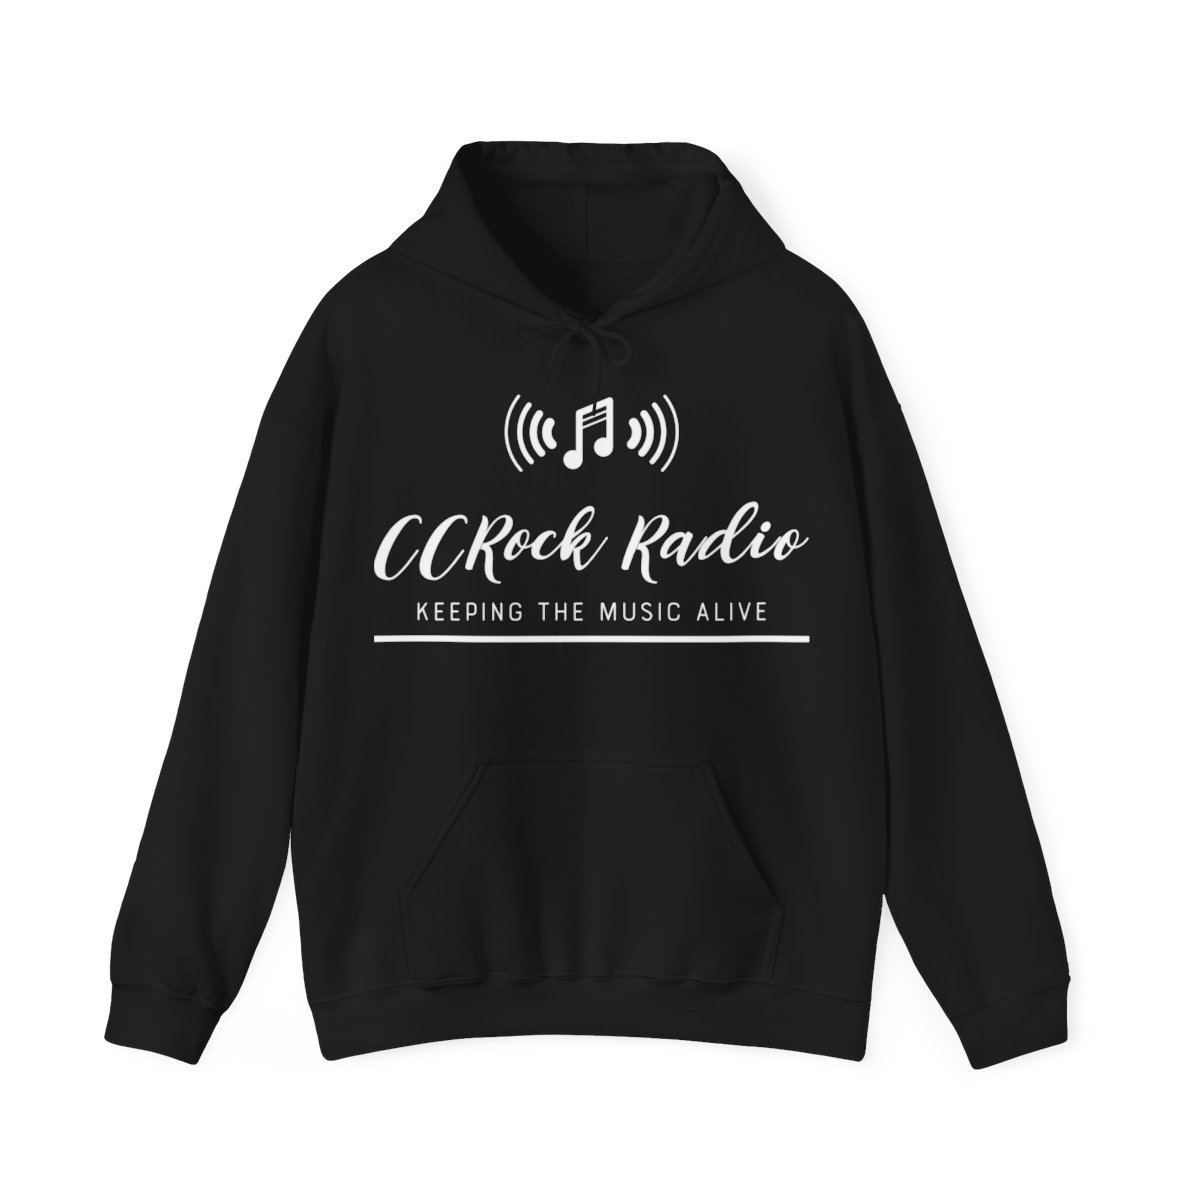 Classic Christian Rock Radio logo Pullover Hooded Sweatshirt 185MD